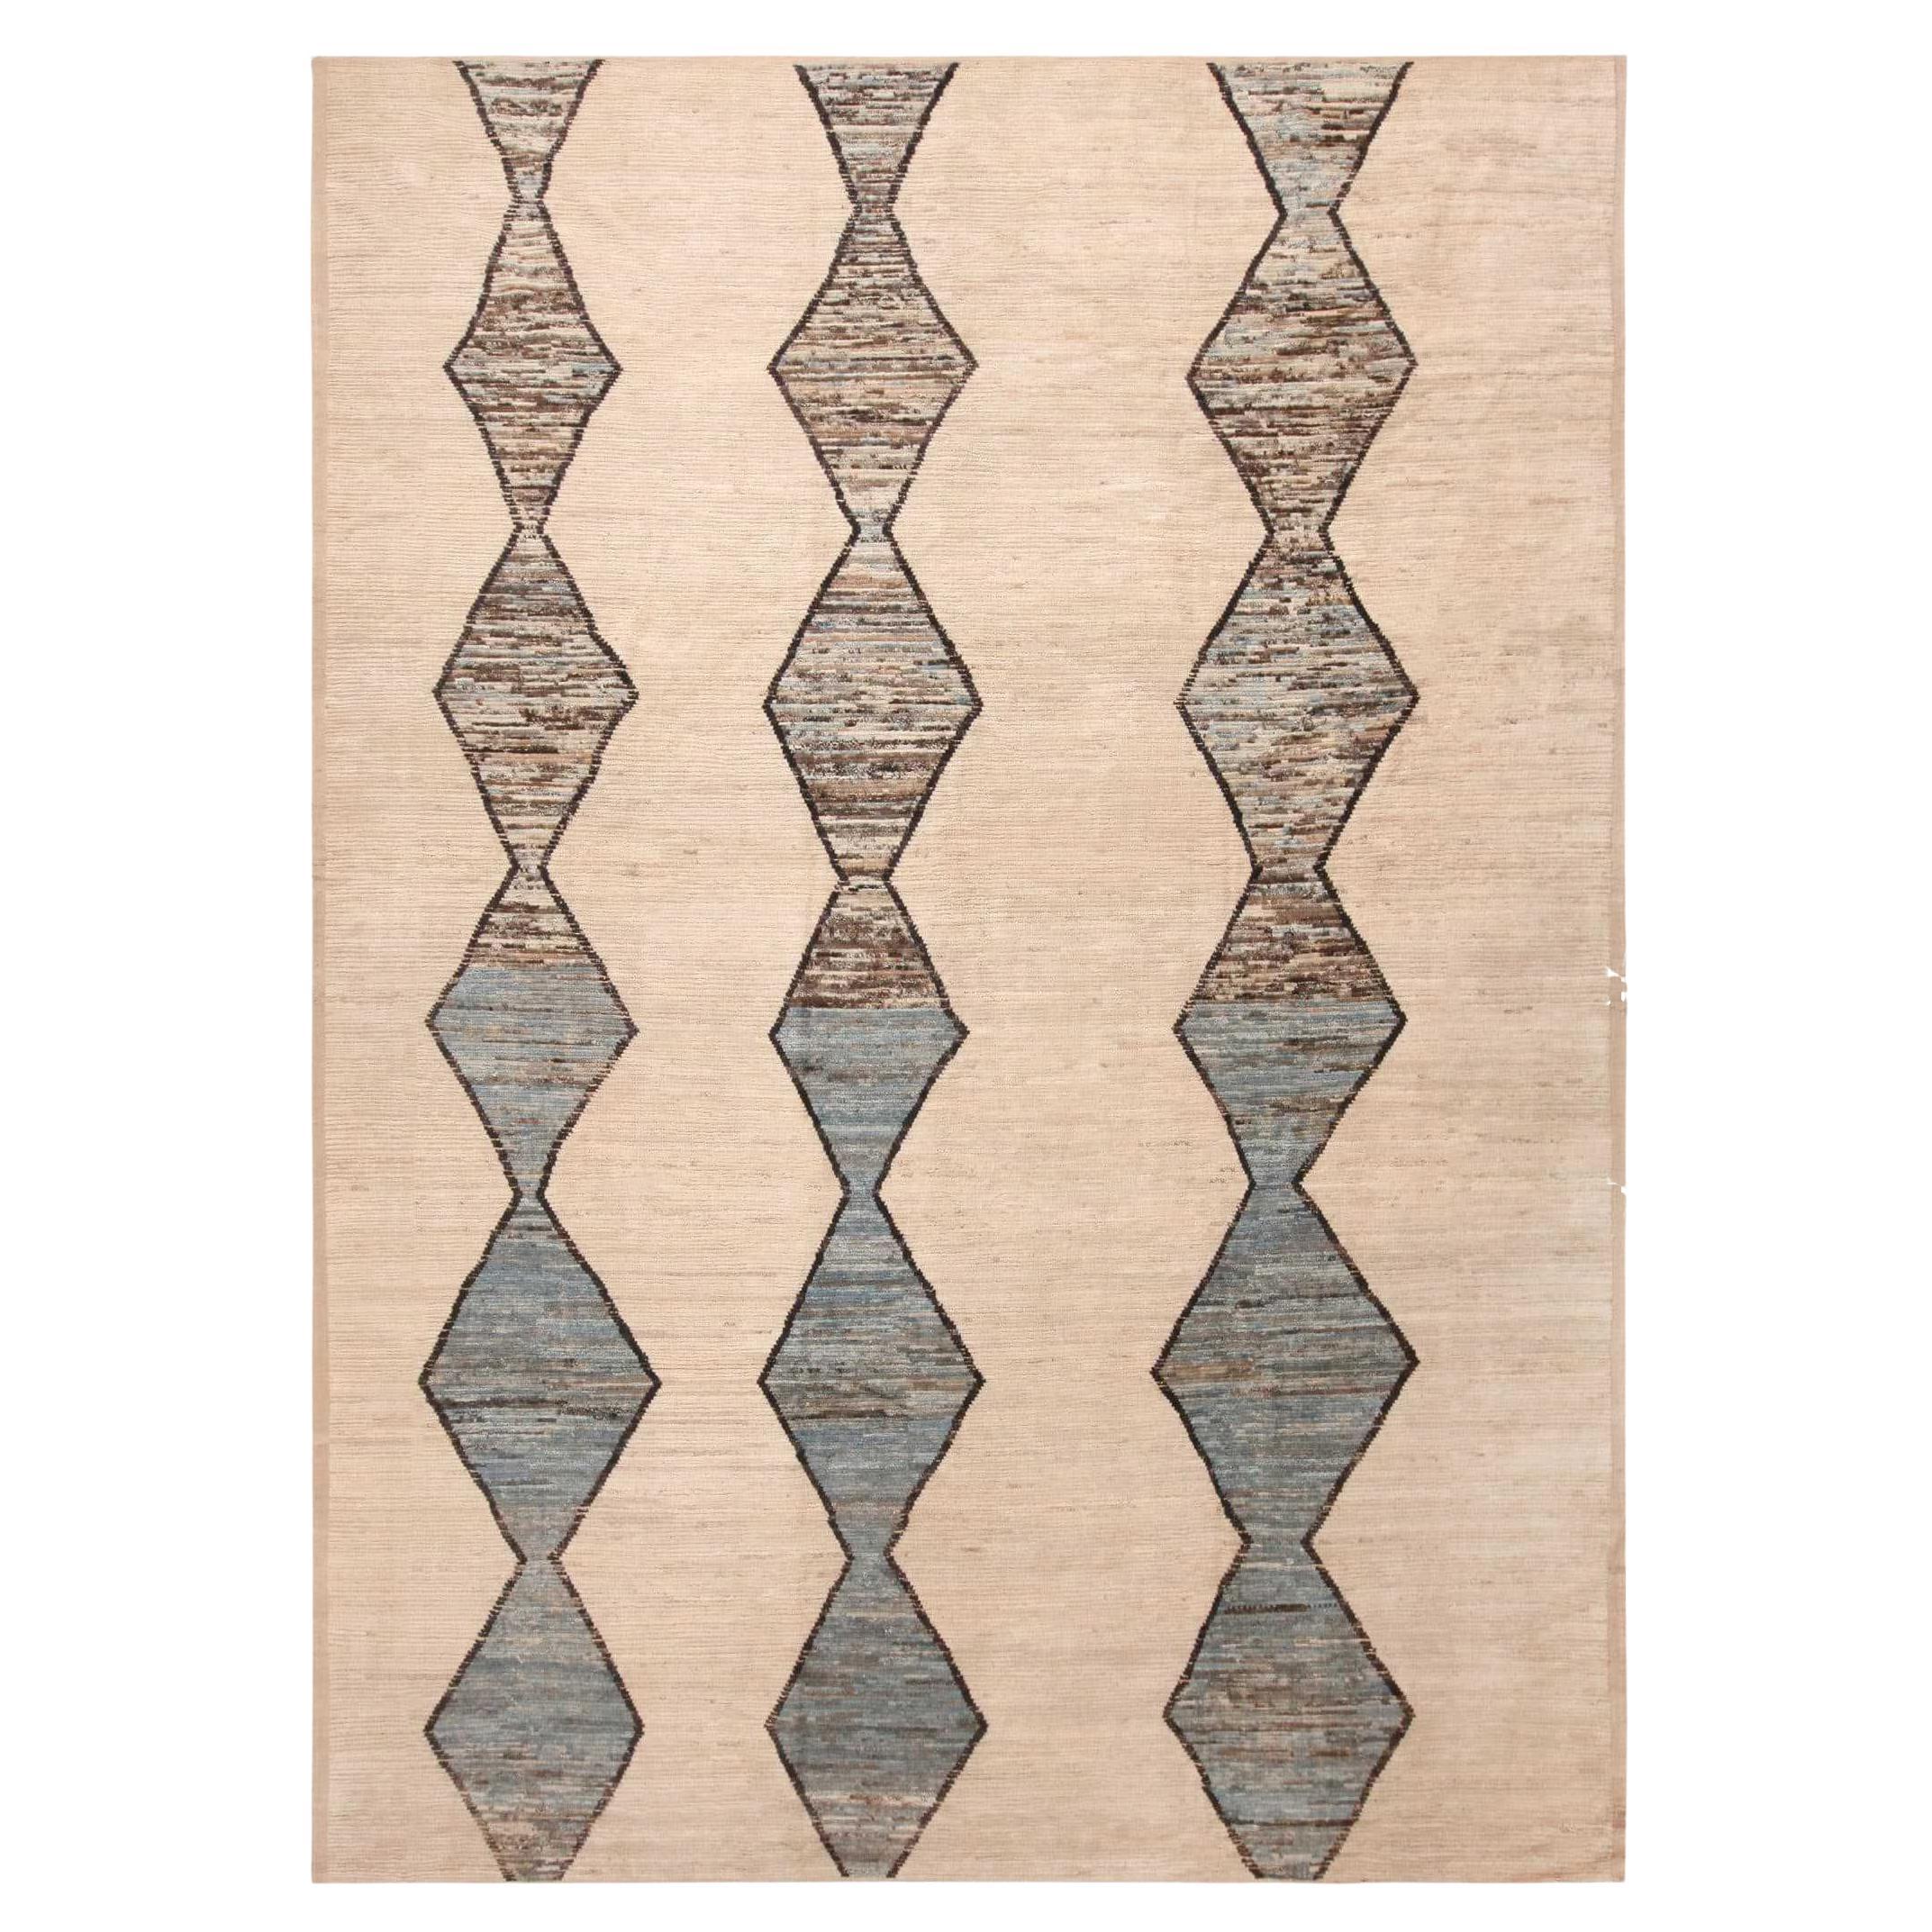 Nazmiyal Collection Geometric Tribal Design Decorative Area Rug 11'1" x 15'1"